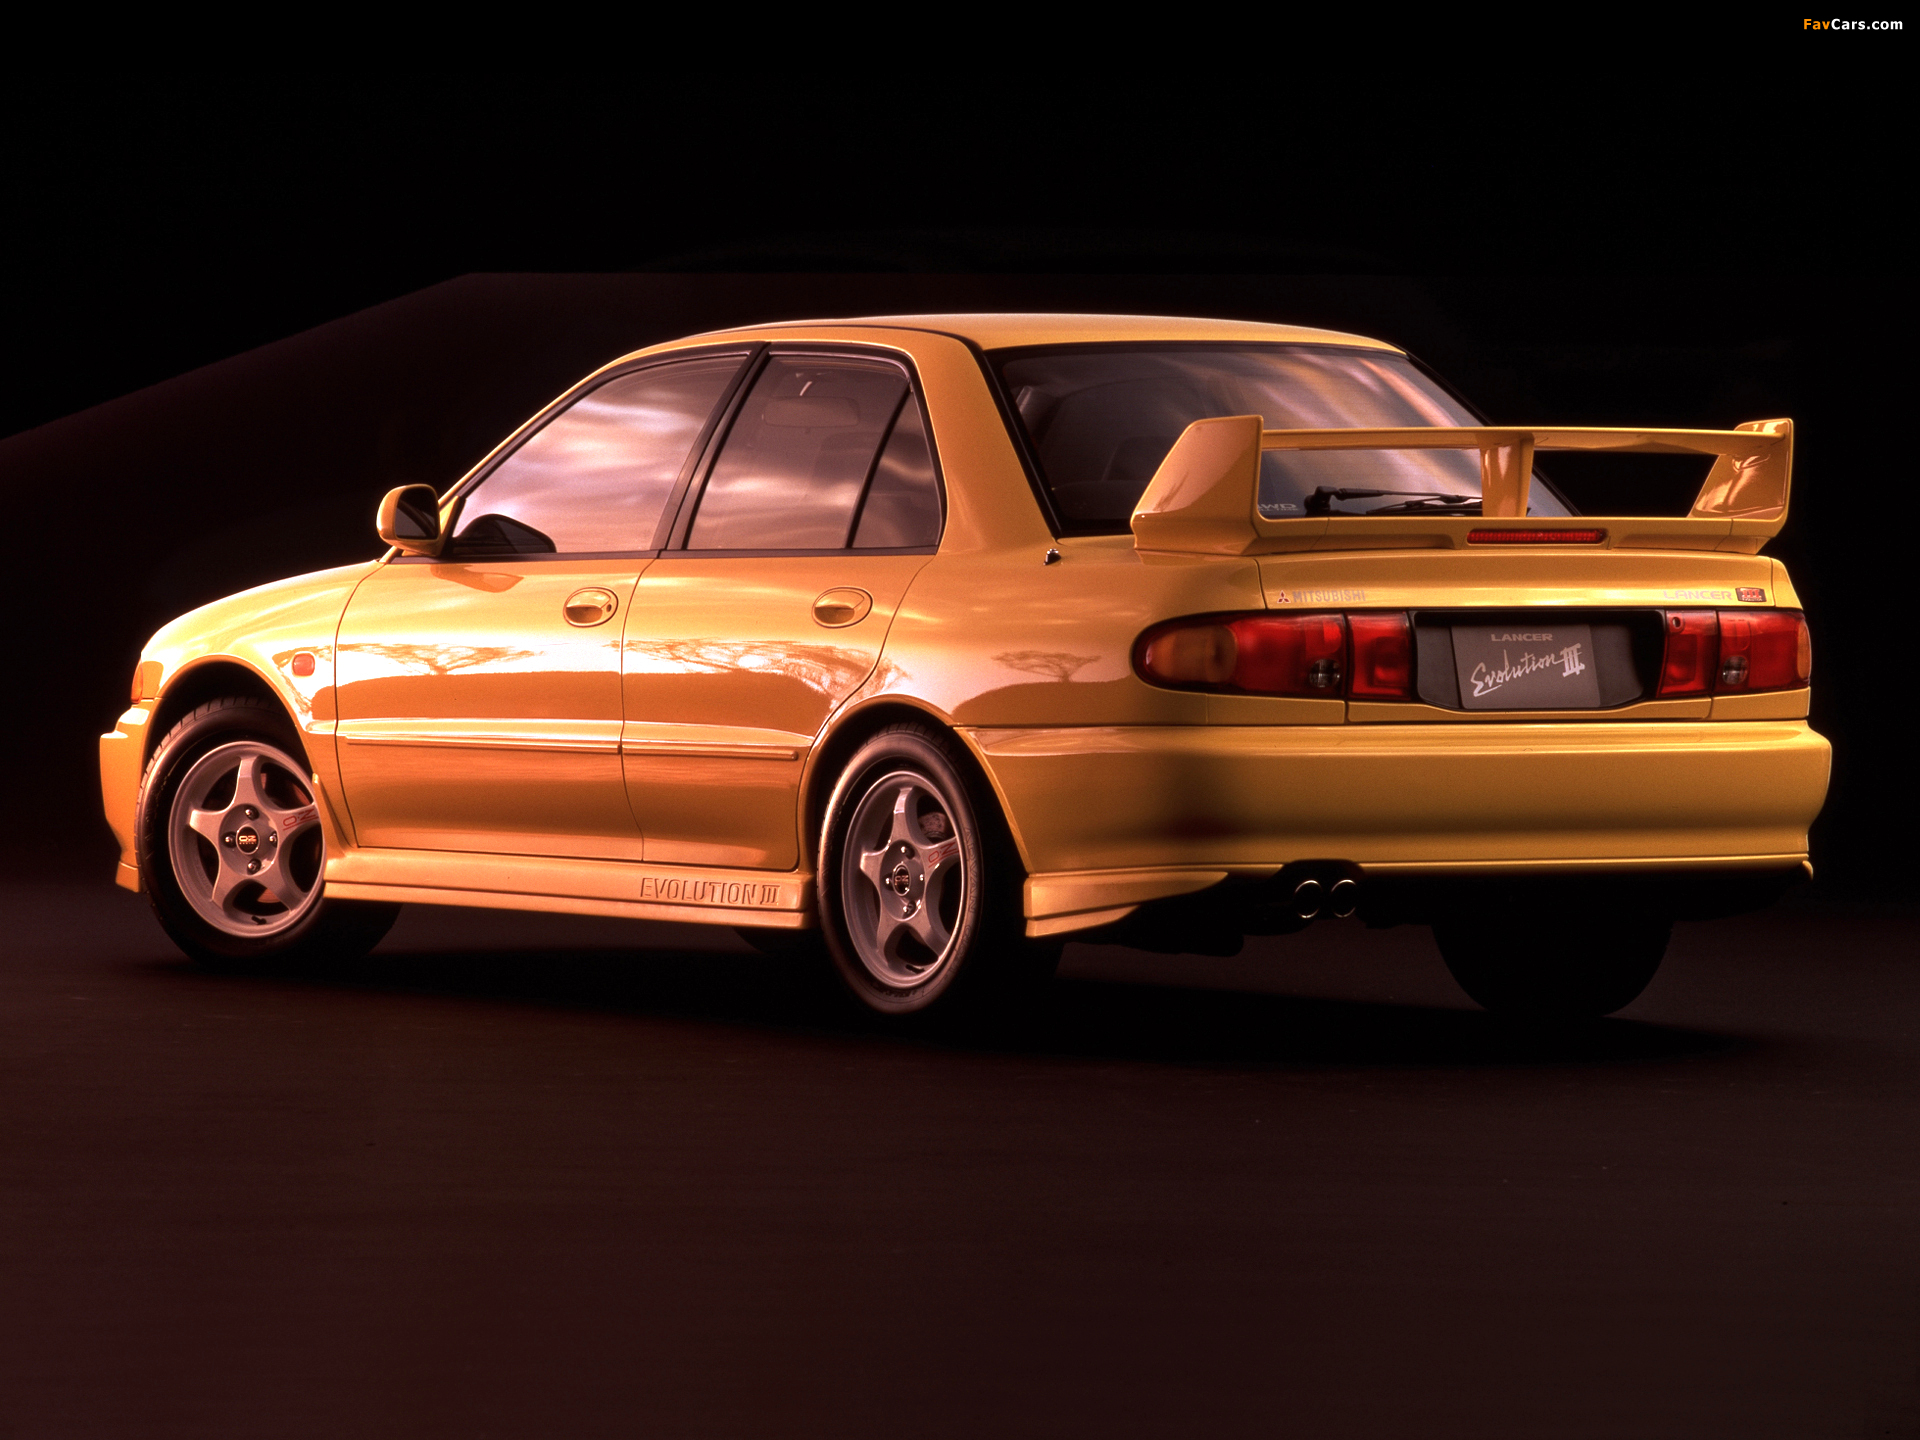 1995 Mitsubishi Lancer GSR Evolution III